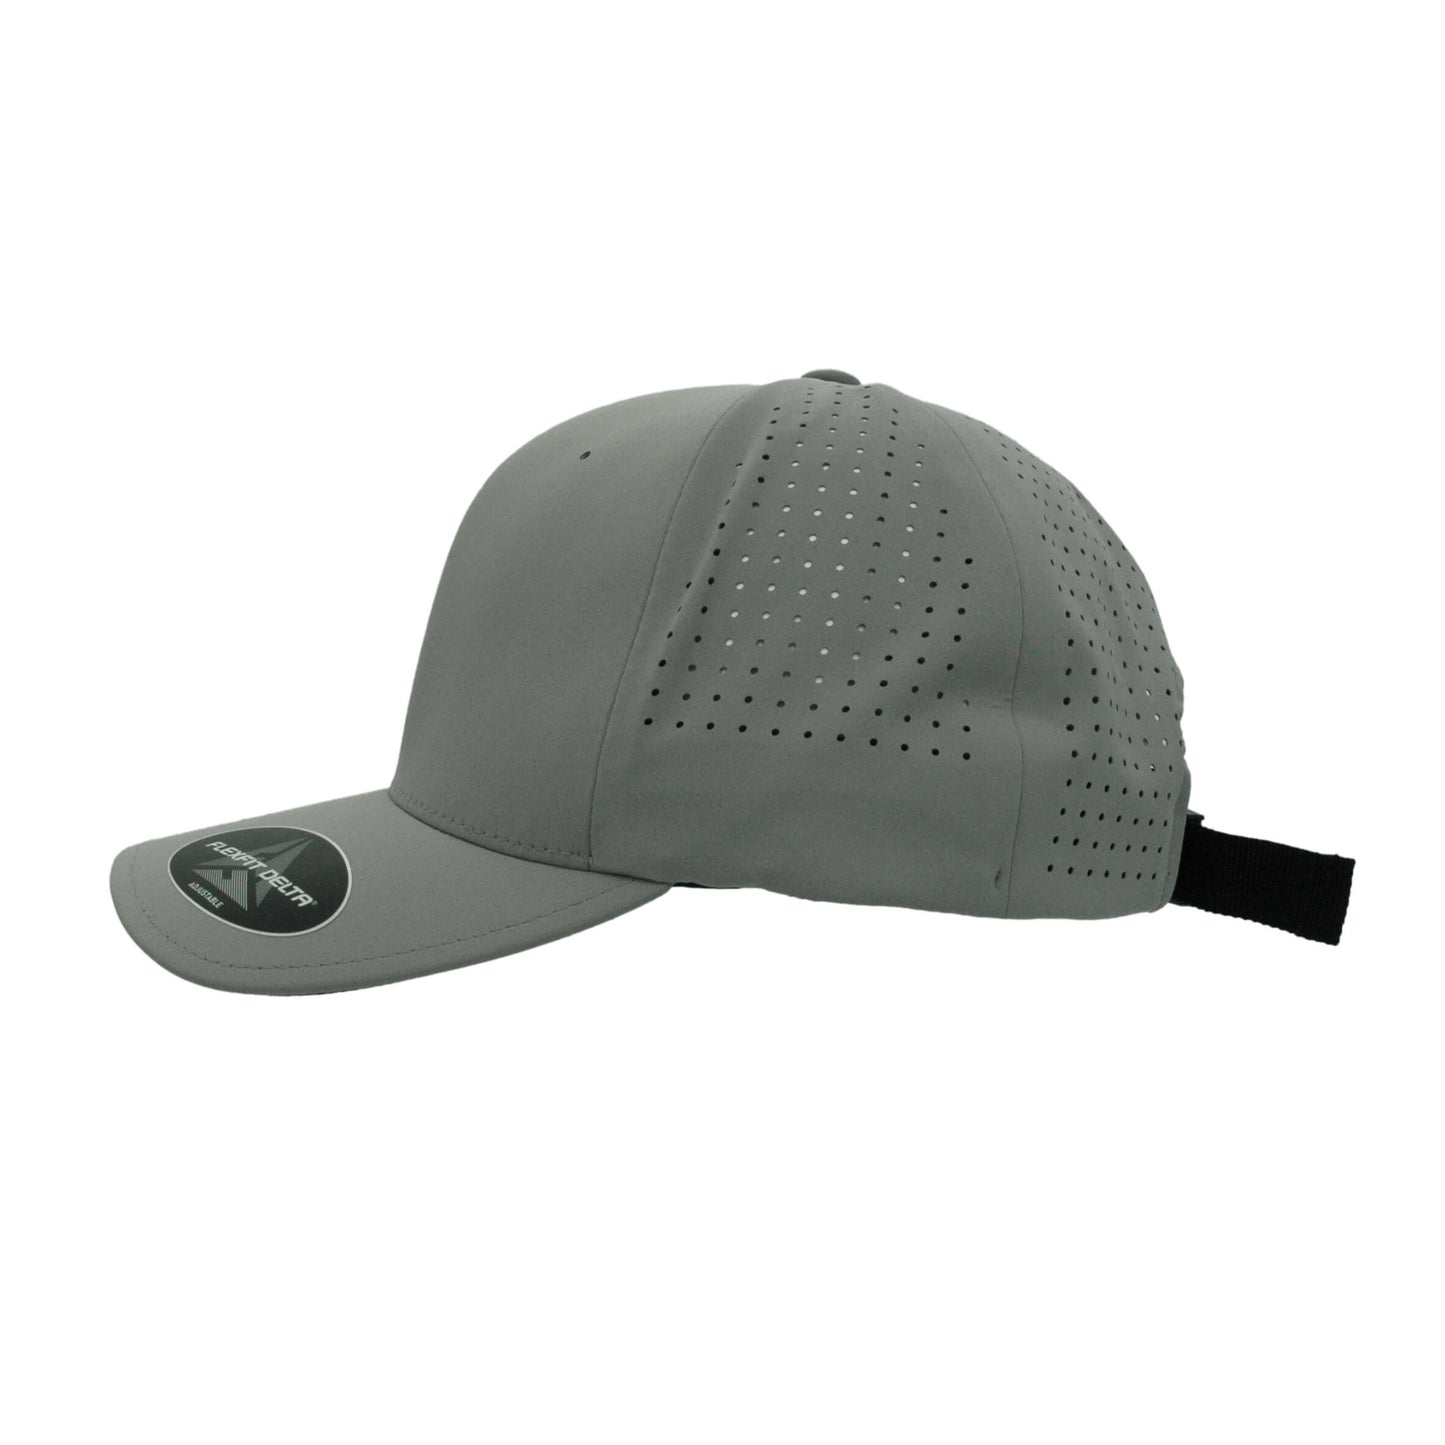 DELTA-PERF-ADJ-G Delta Grey Perforated Cap with Adjustable Fit